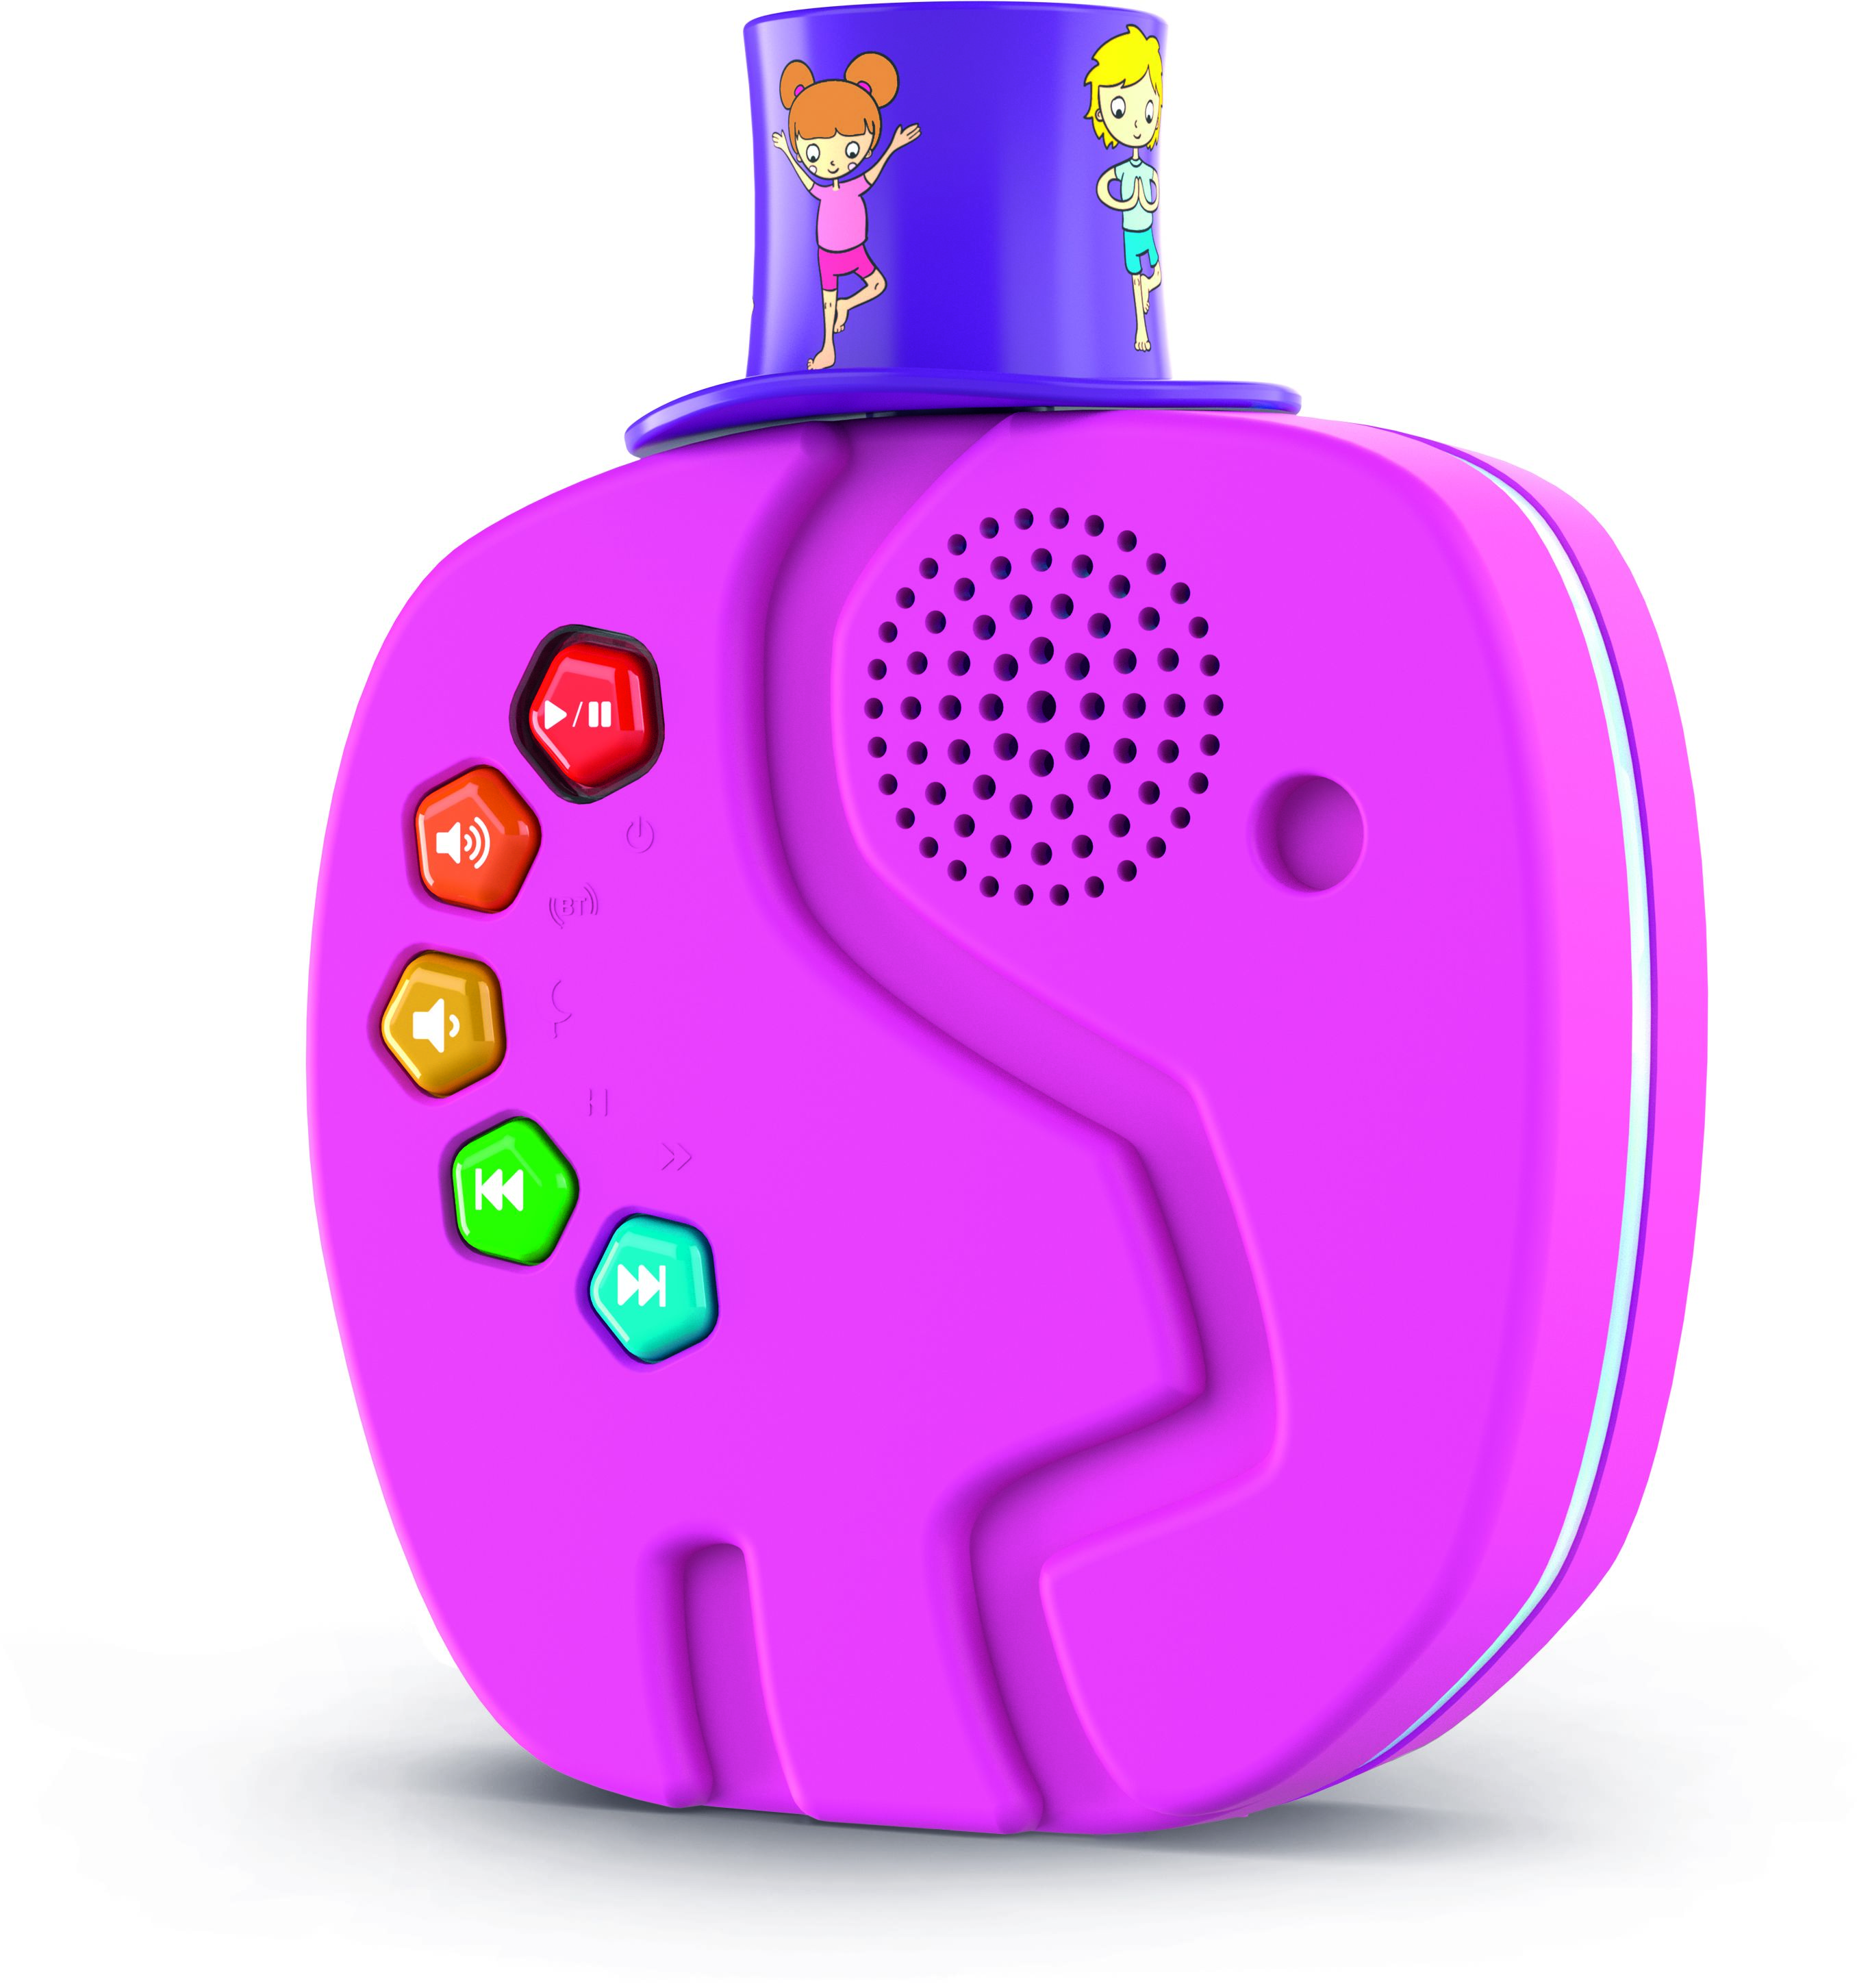 TECHNISAT TECHNIFANT Audioplayer Kinder für TECHNIFANT-Look, im Pink